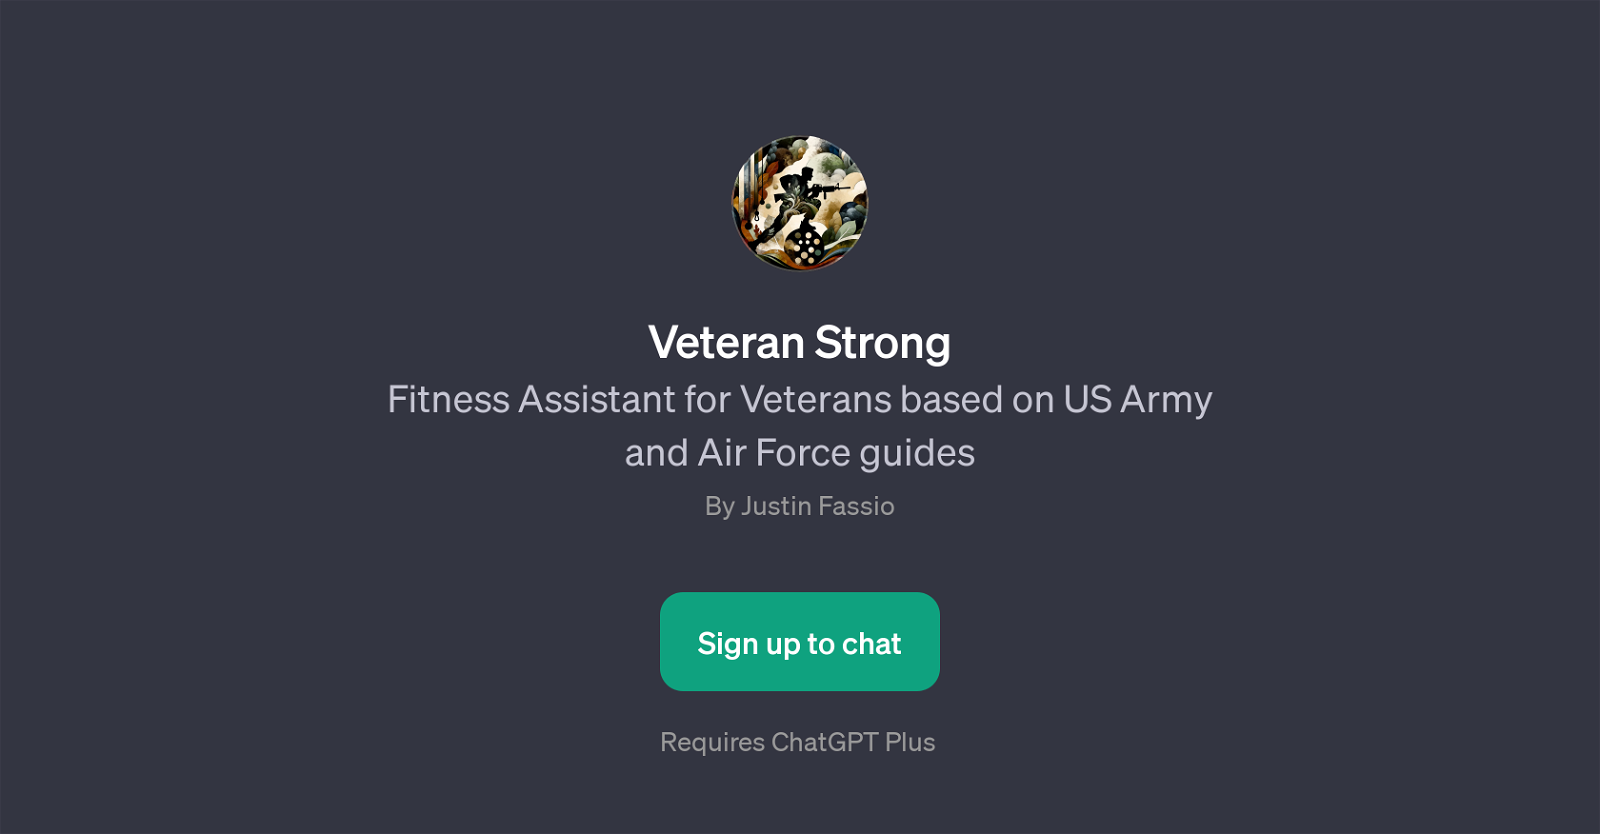 Veteran Strong website